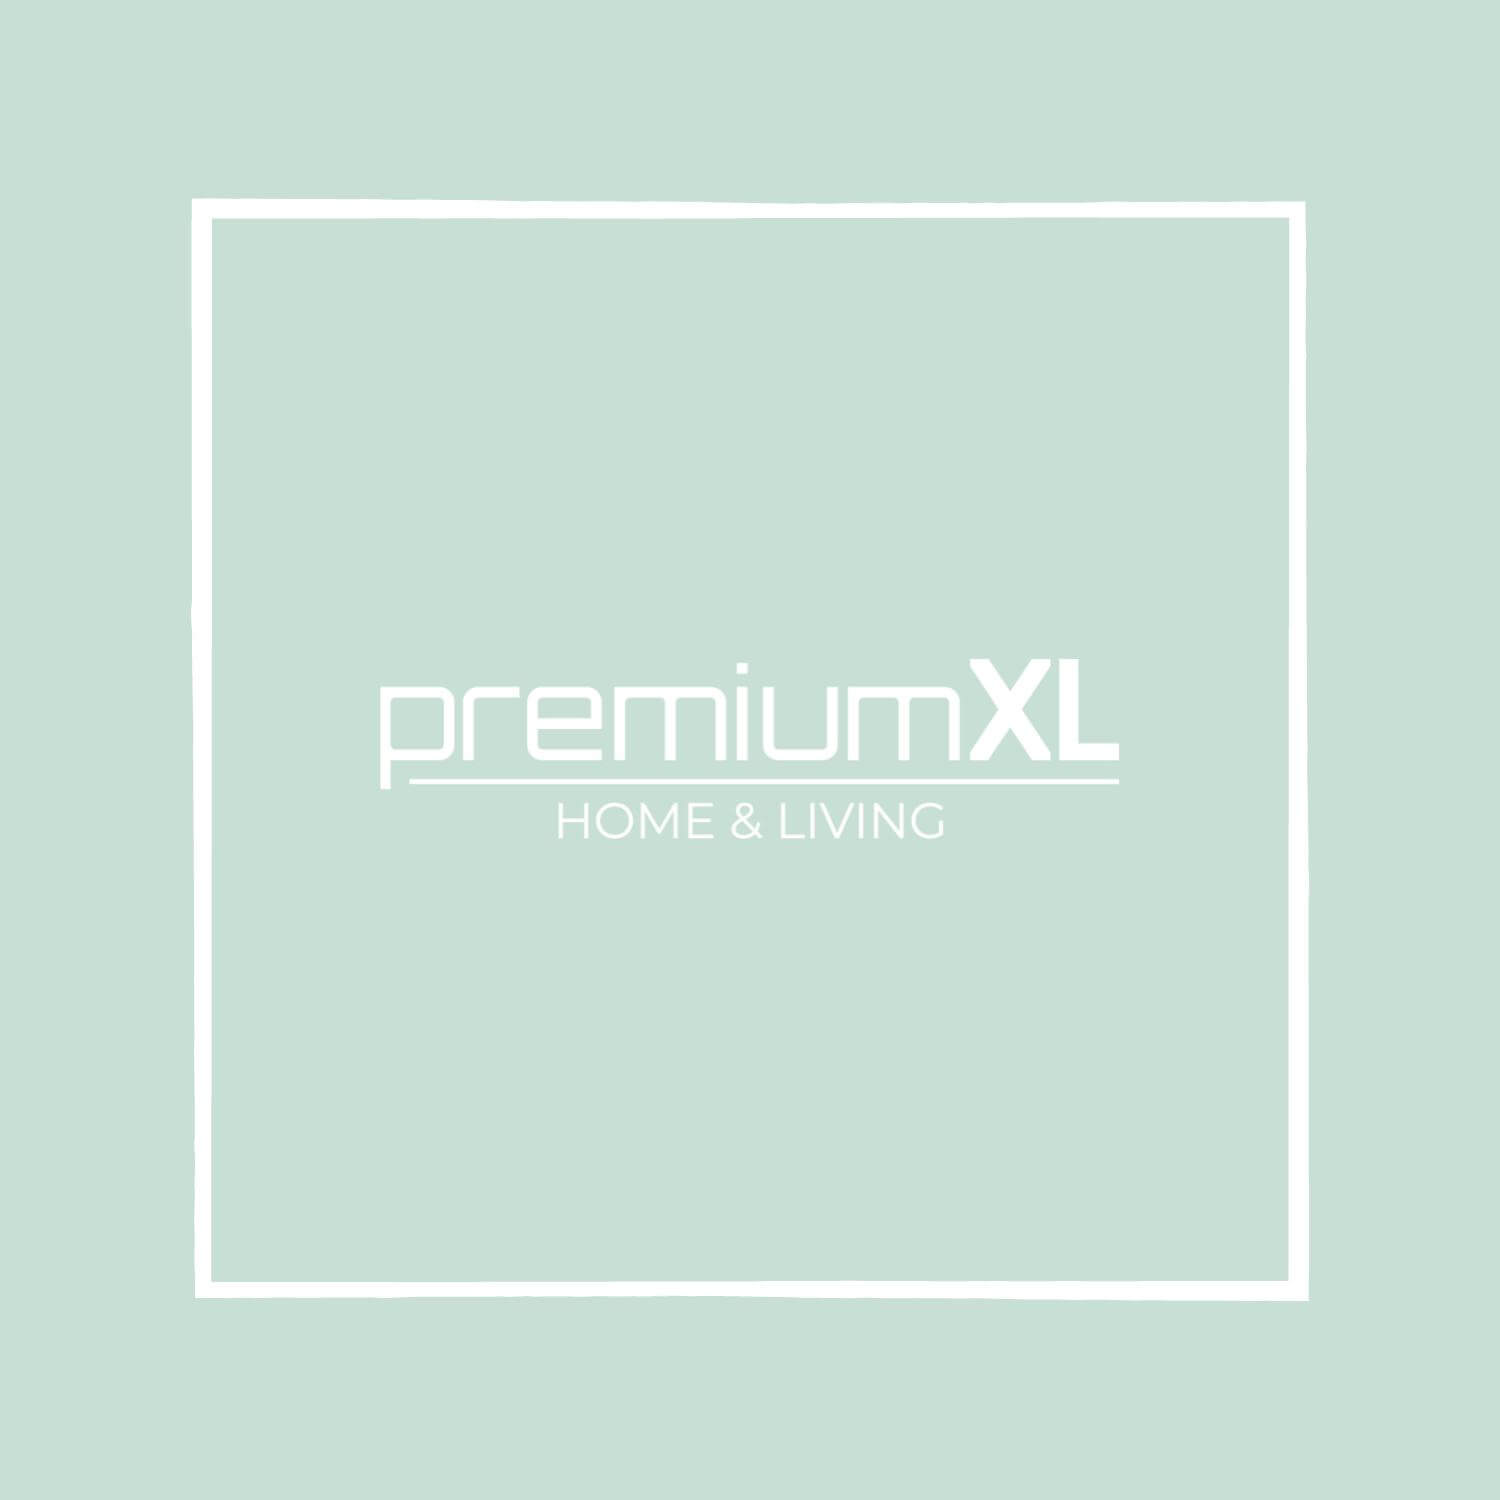 premium.xl logo